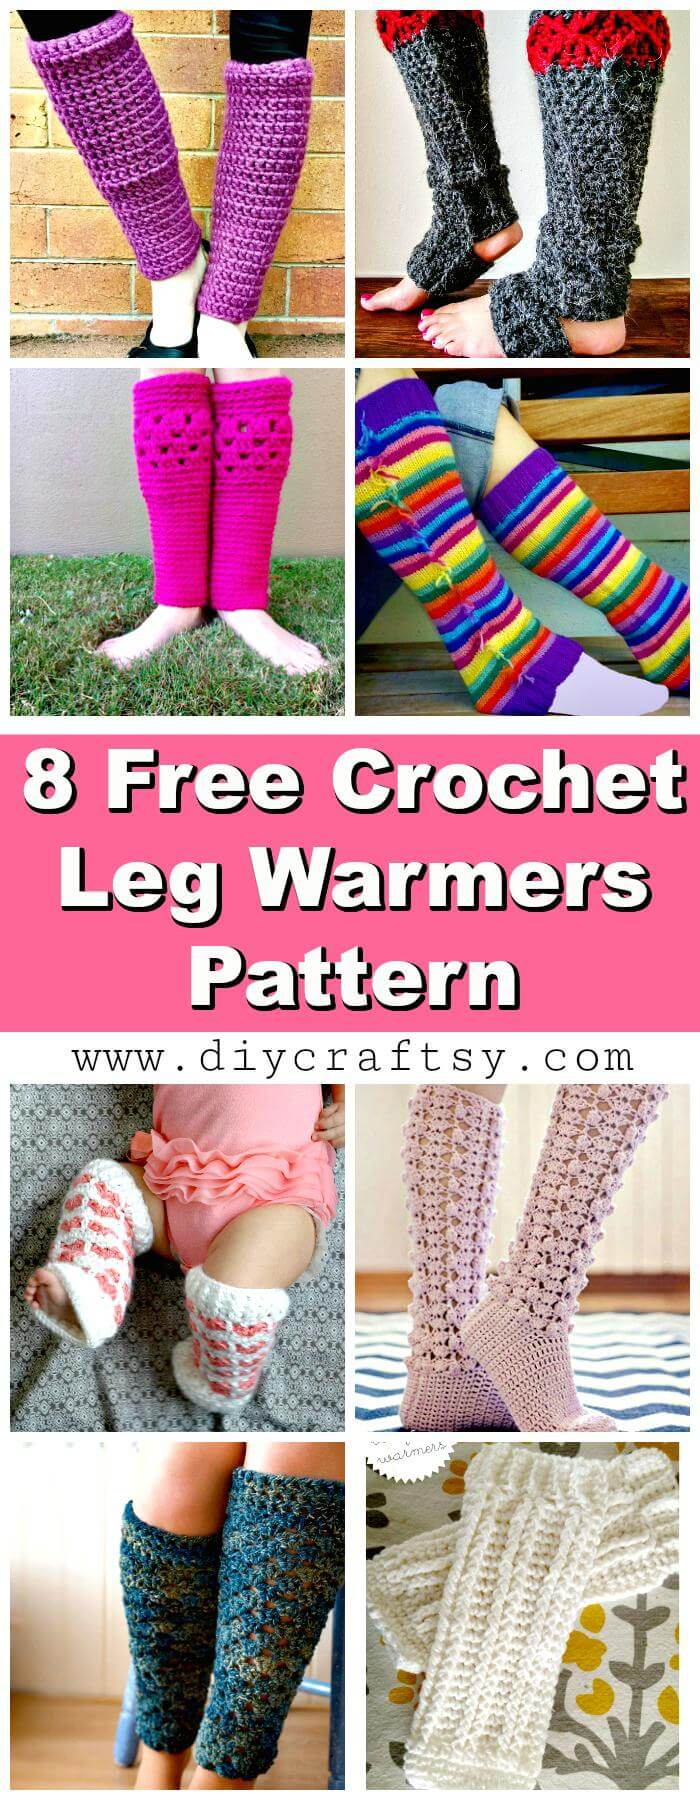 Free Crochet Yoga Socks Pattern Crochet Leg Warmers 8 Free Crochet Leg Warmer Patterns Diy Crafts